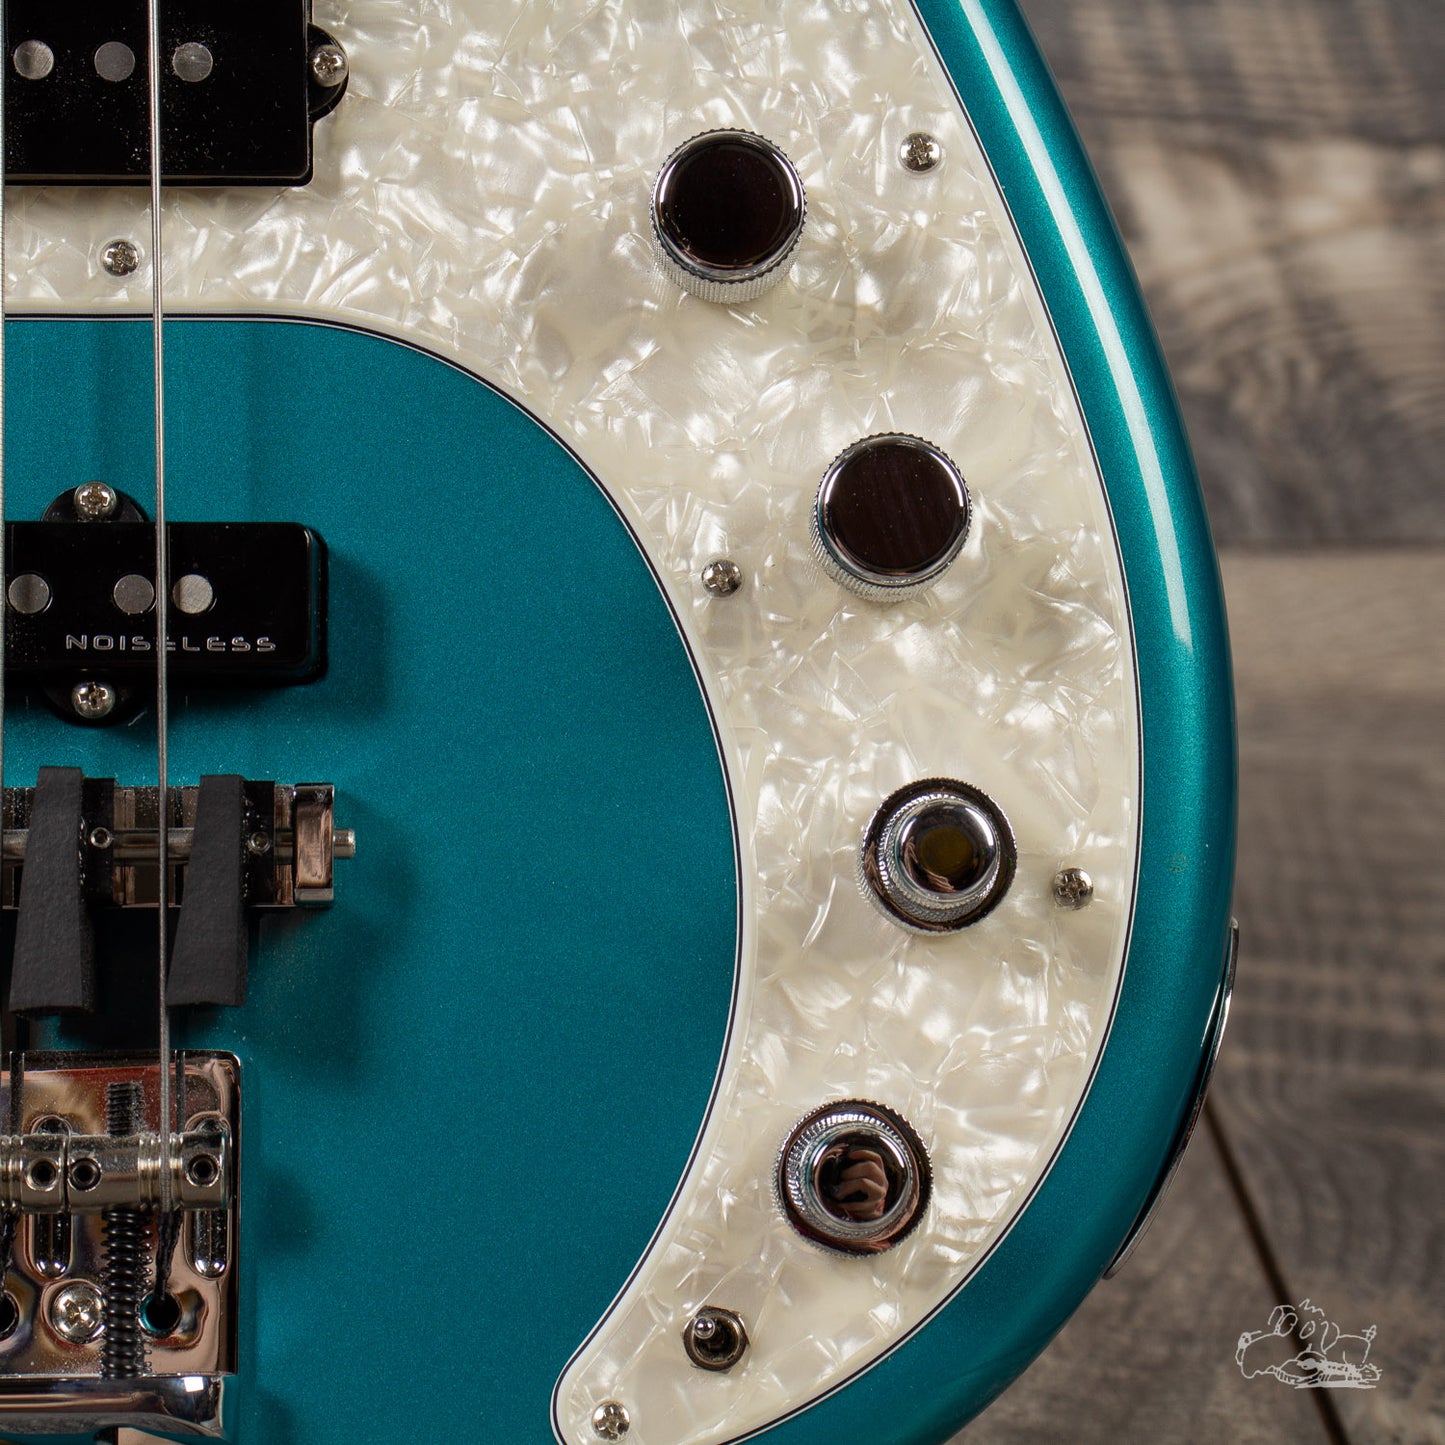 2018 Fender American Elite Precision Bass - Ocean Turquoise